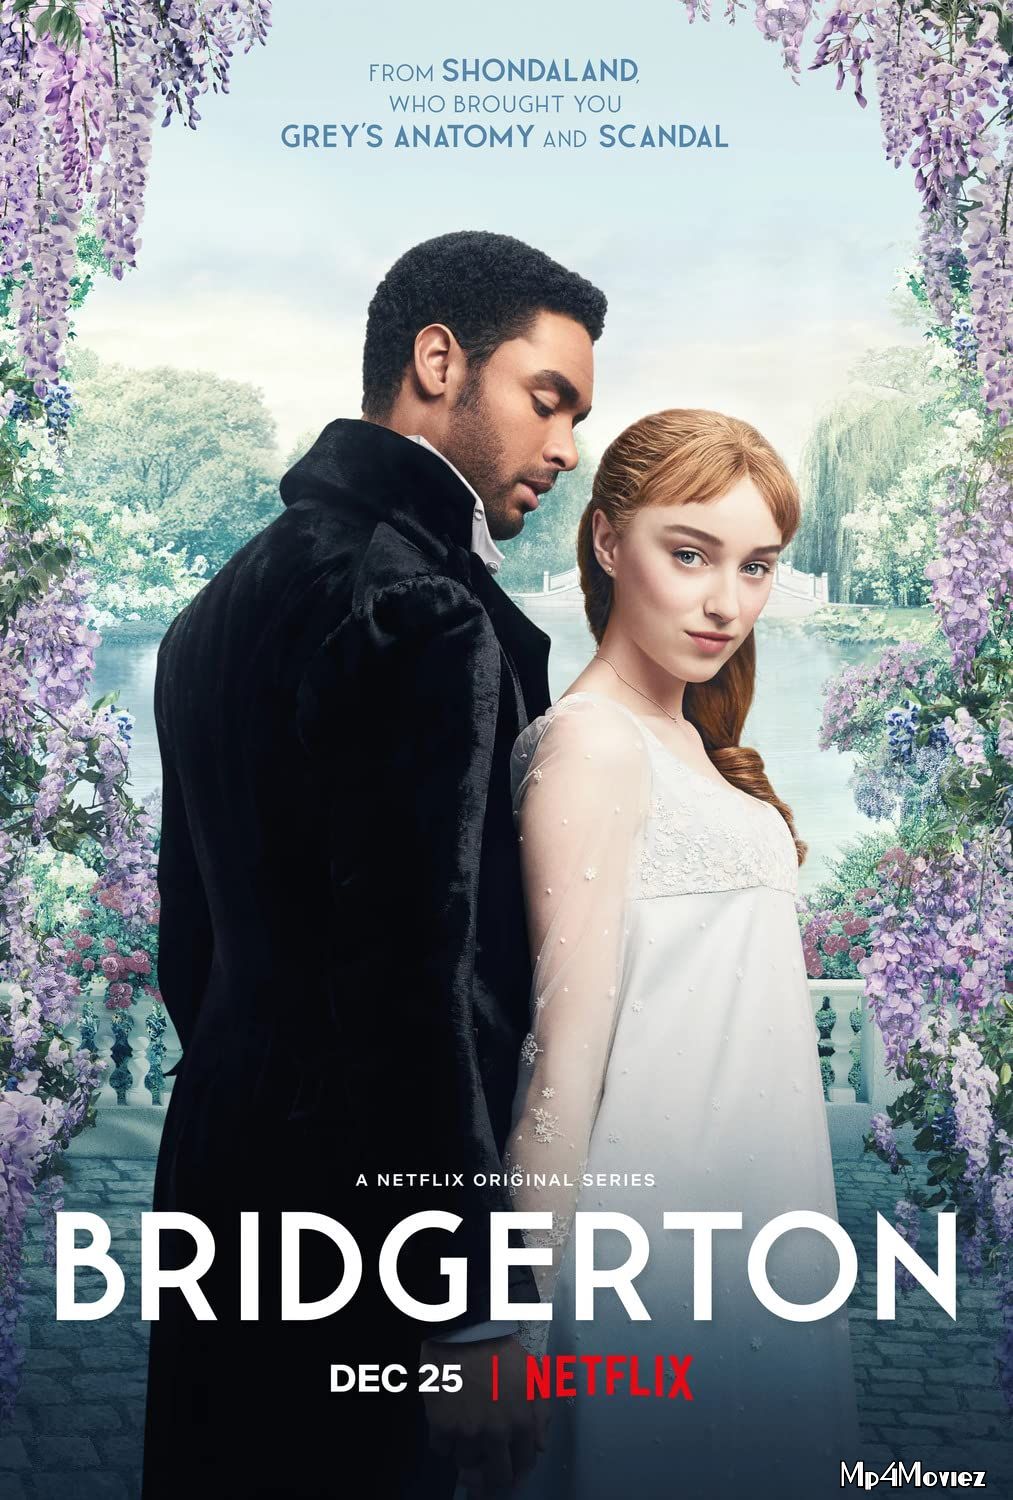 Bridgerton S01 (2020) Hindi Dubbed Complete Netflix Web Series download full movie